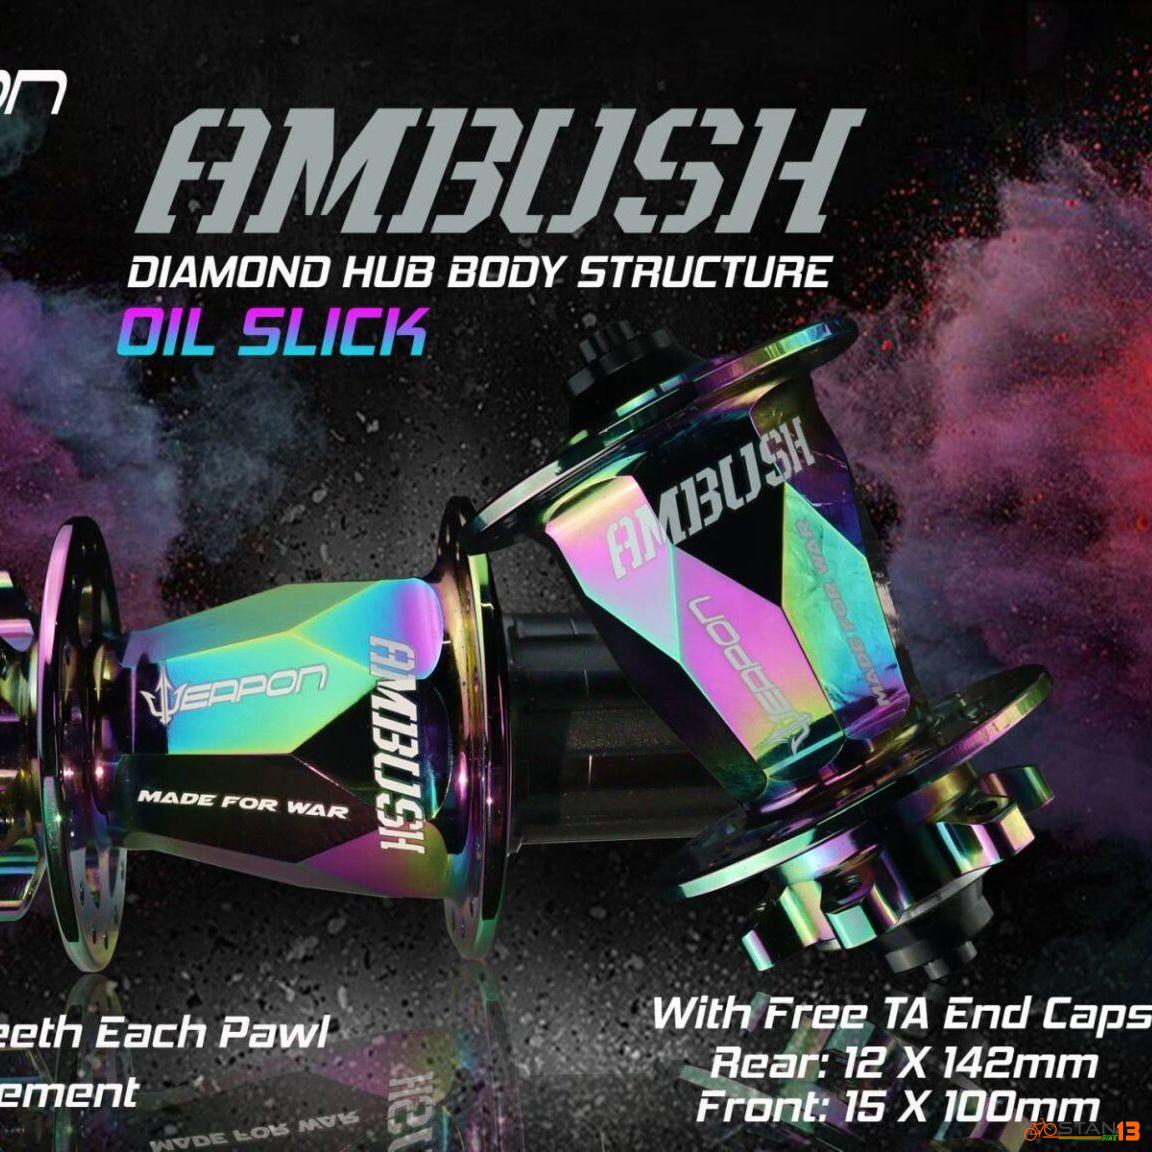 Hub Weapon Ambush 2.0 6 Pawls 3 Teeth Each Diamond Design OIL SLICK Color